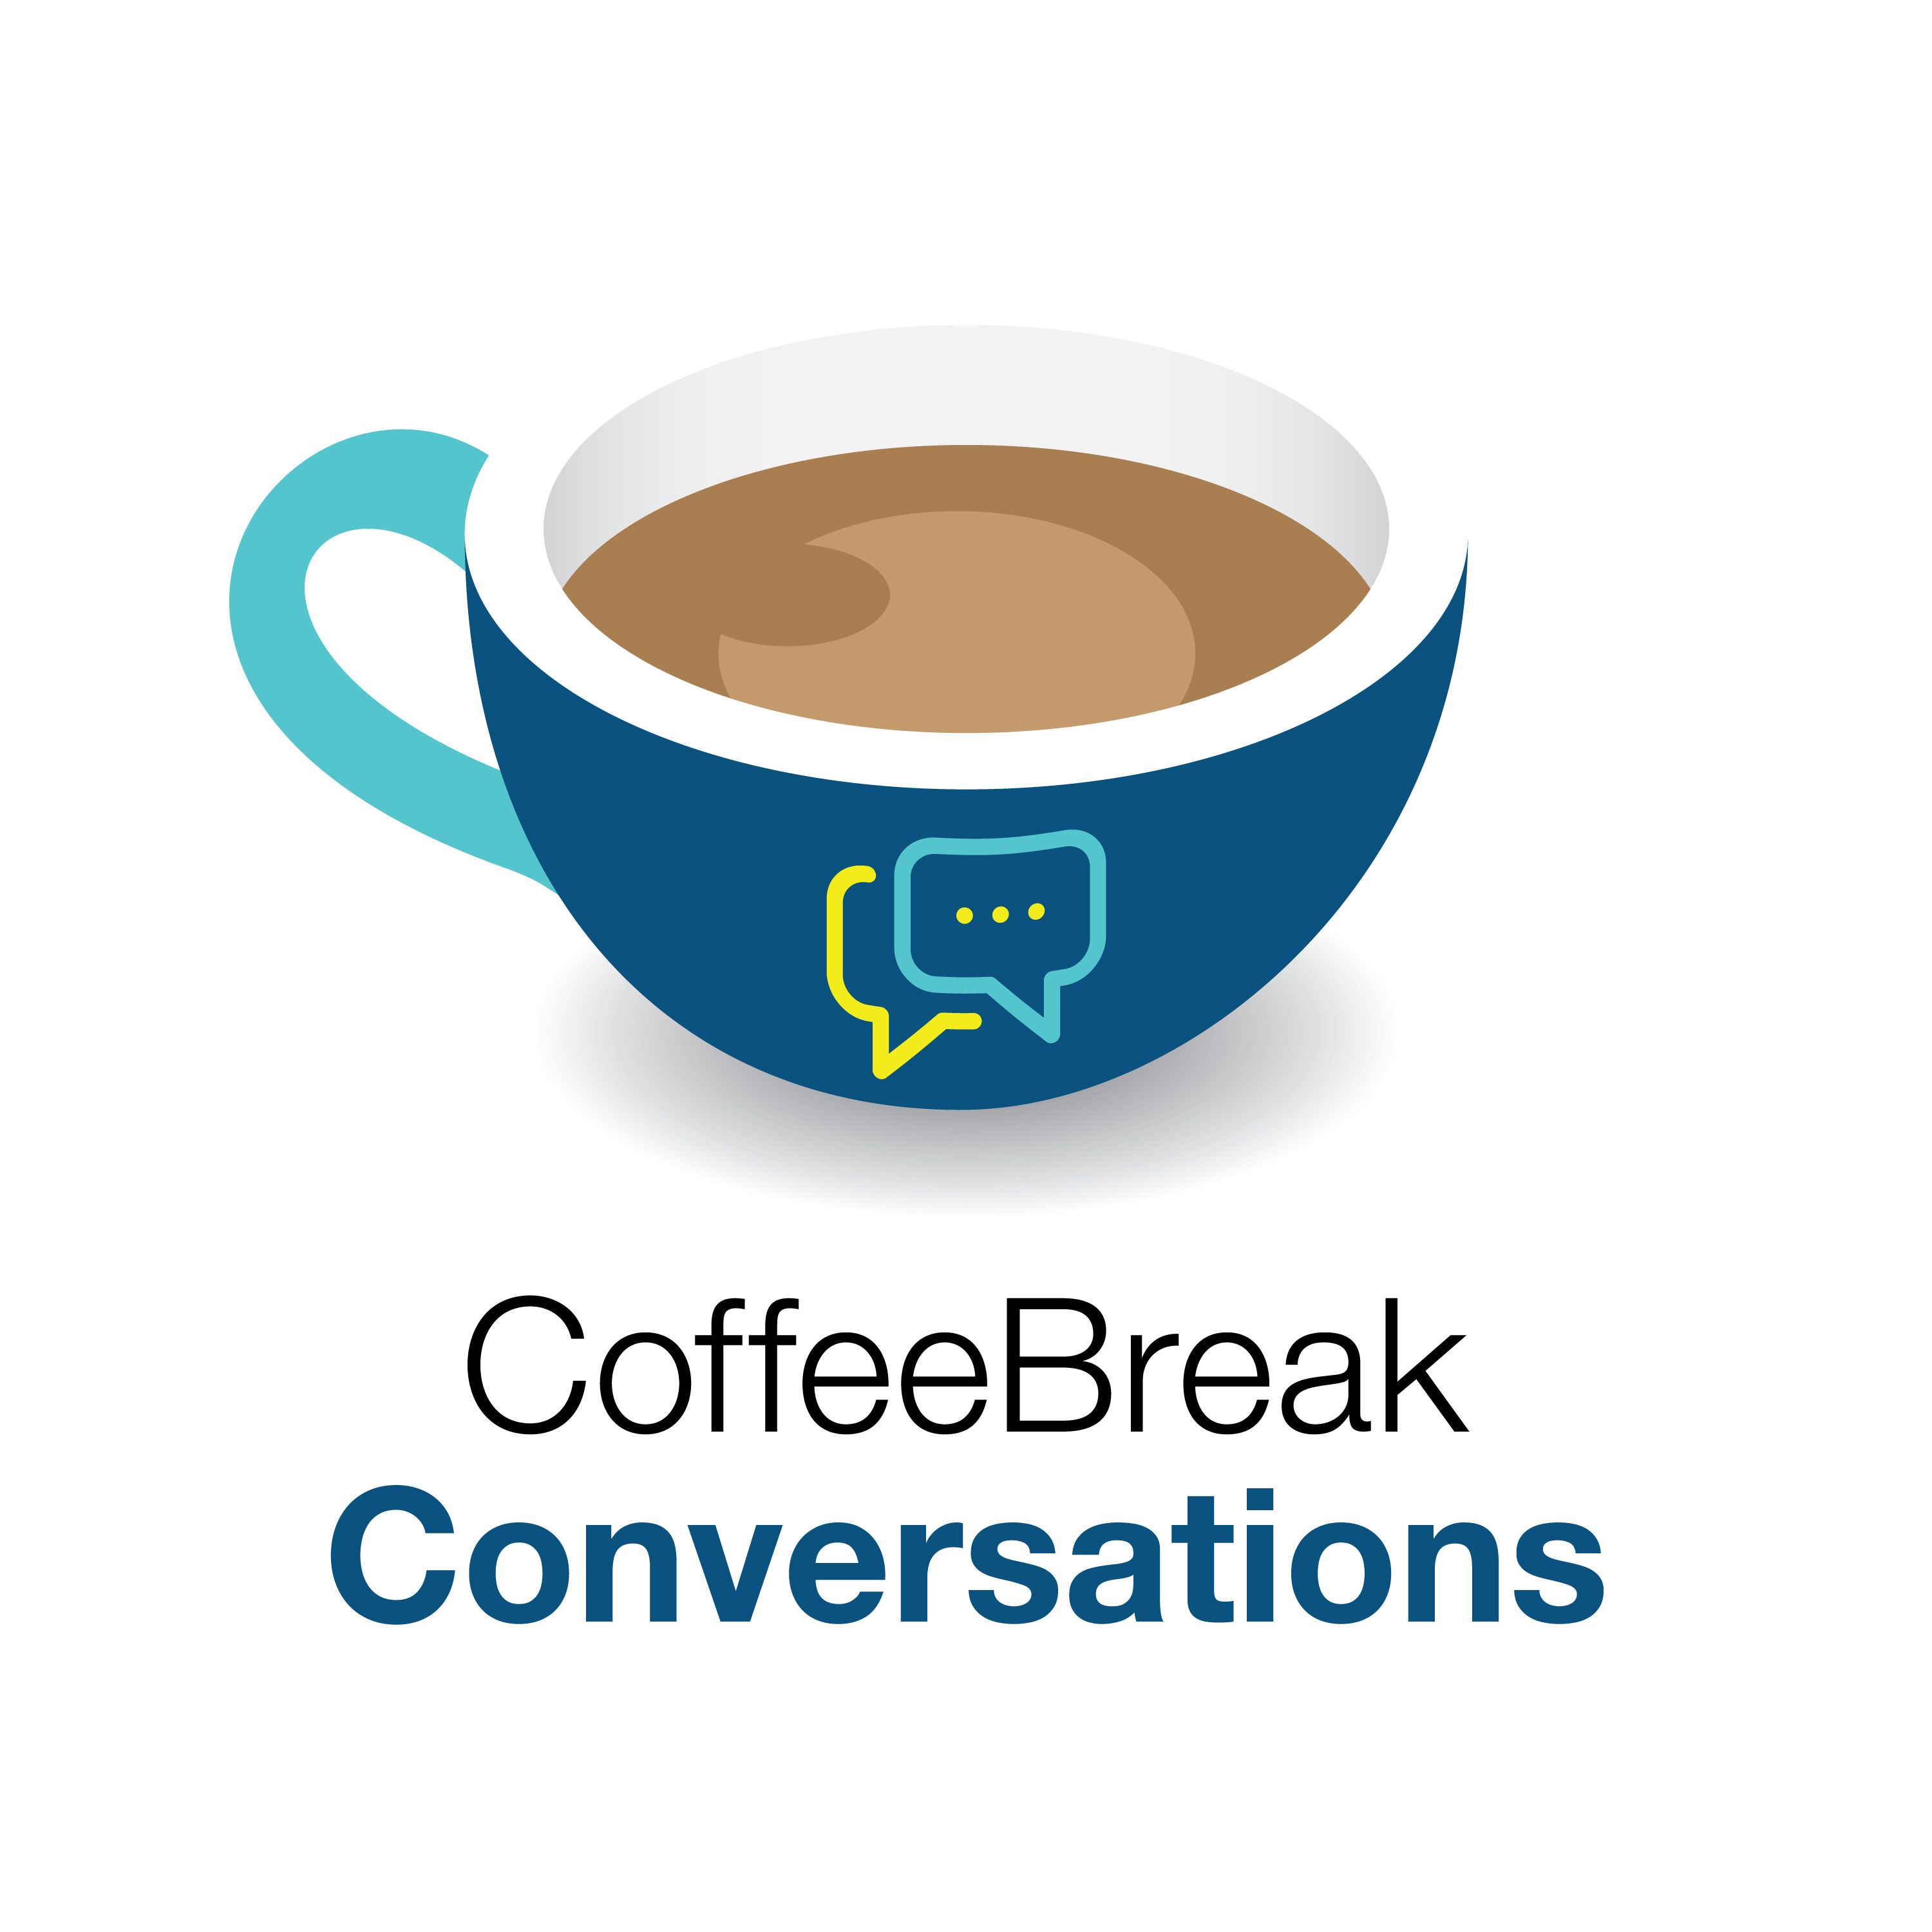 A Coffee Break Conversation with Pierre-Benoît from Coffee Break French